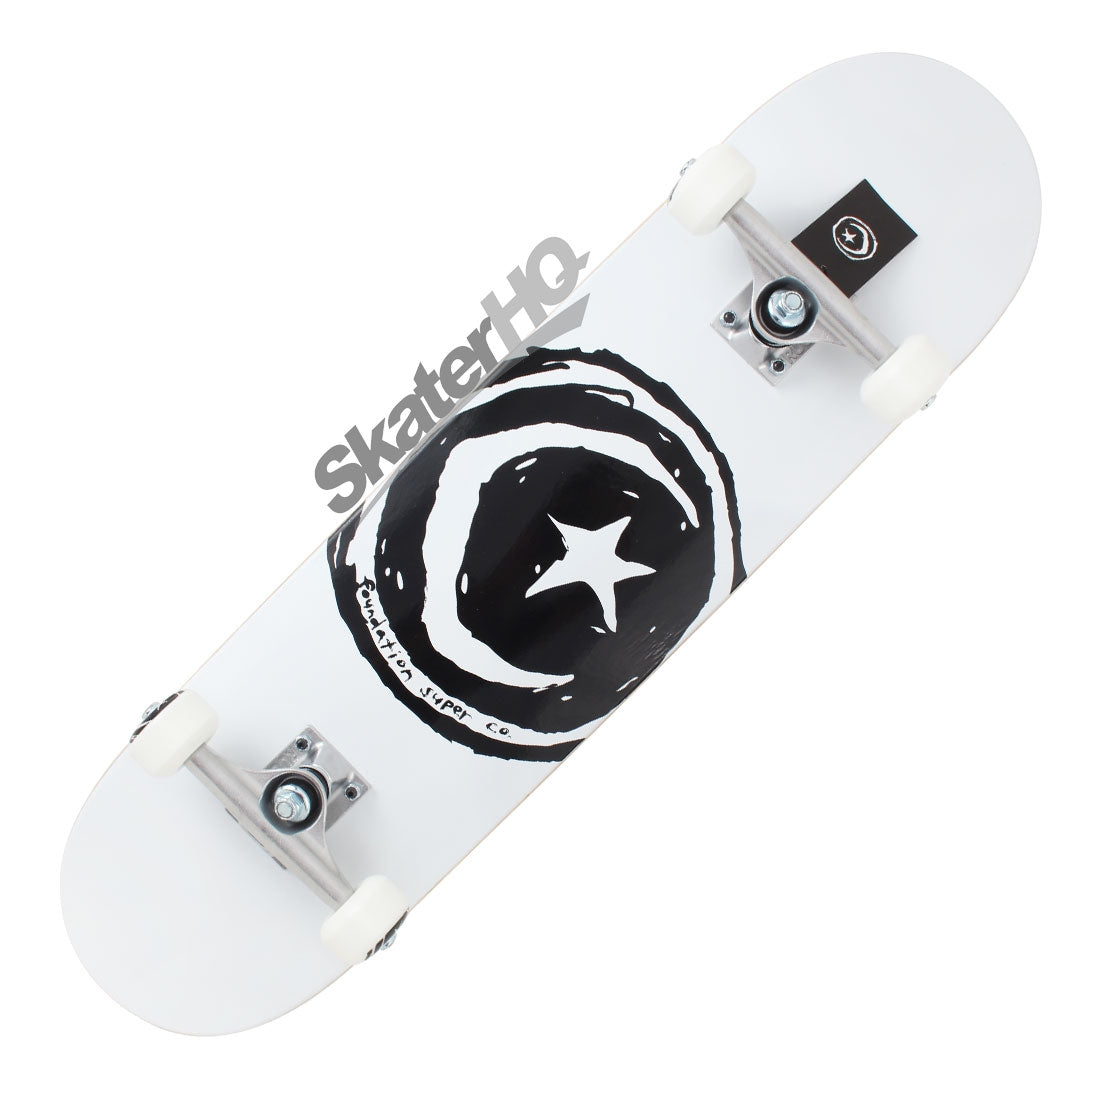 Foundation Star &amp; Moon 7.75 Complete - White Skateboard Completes Modern Street